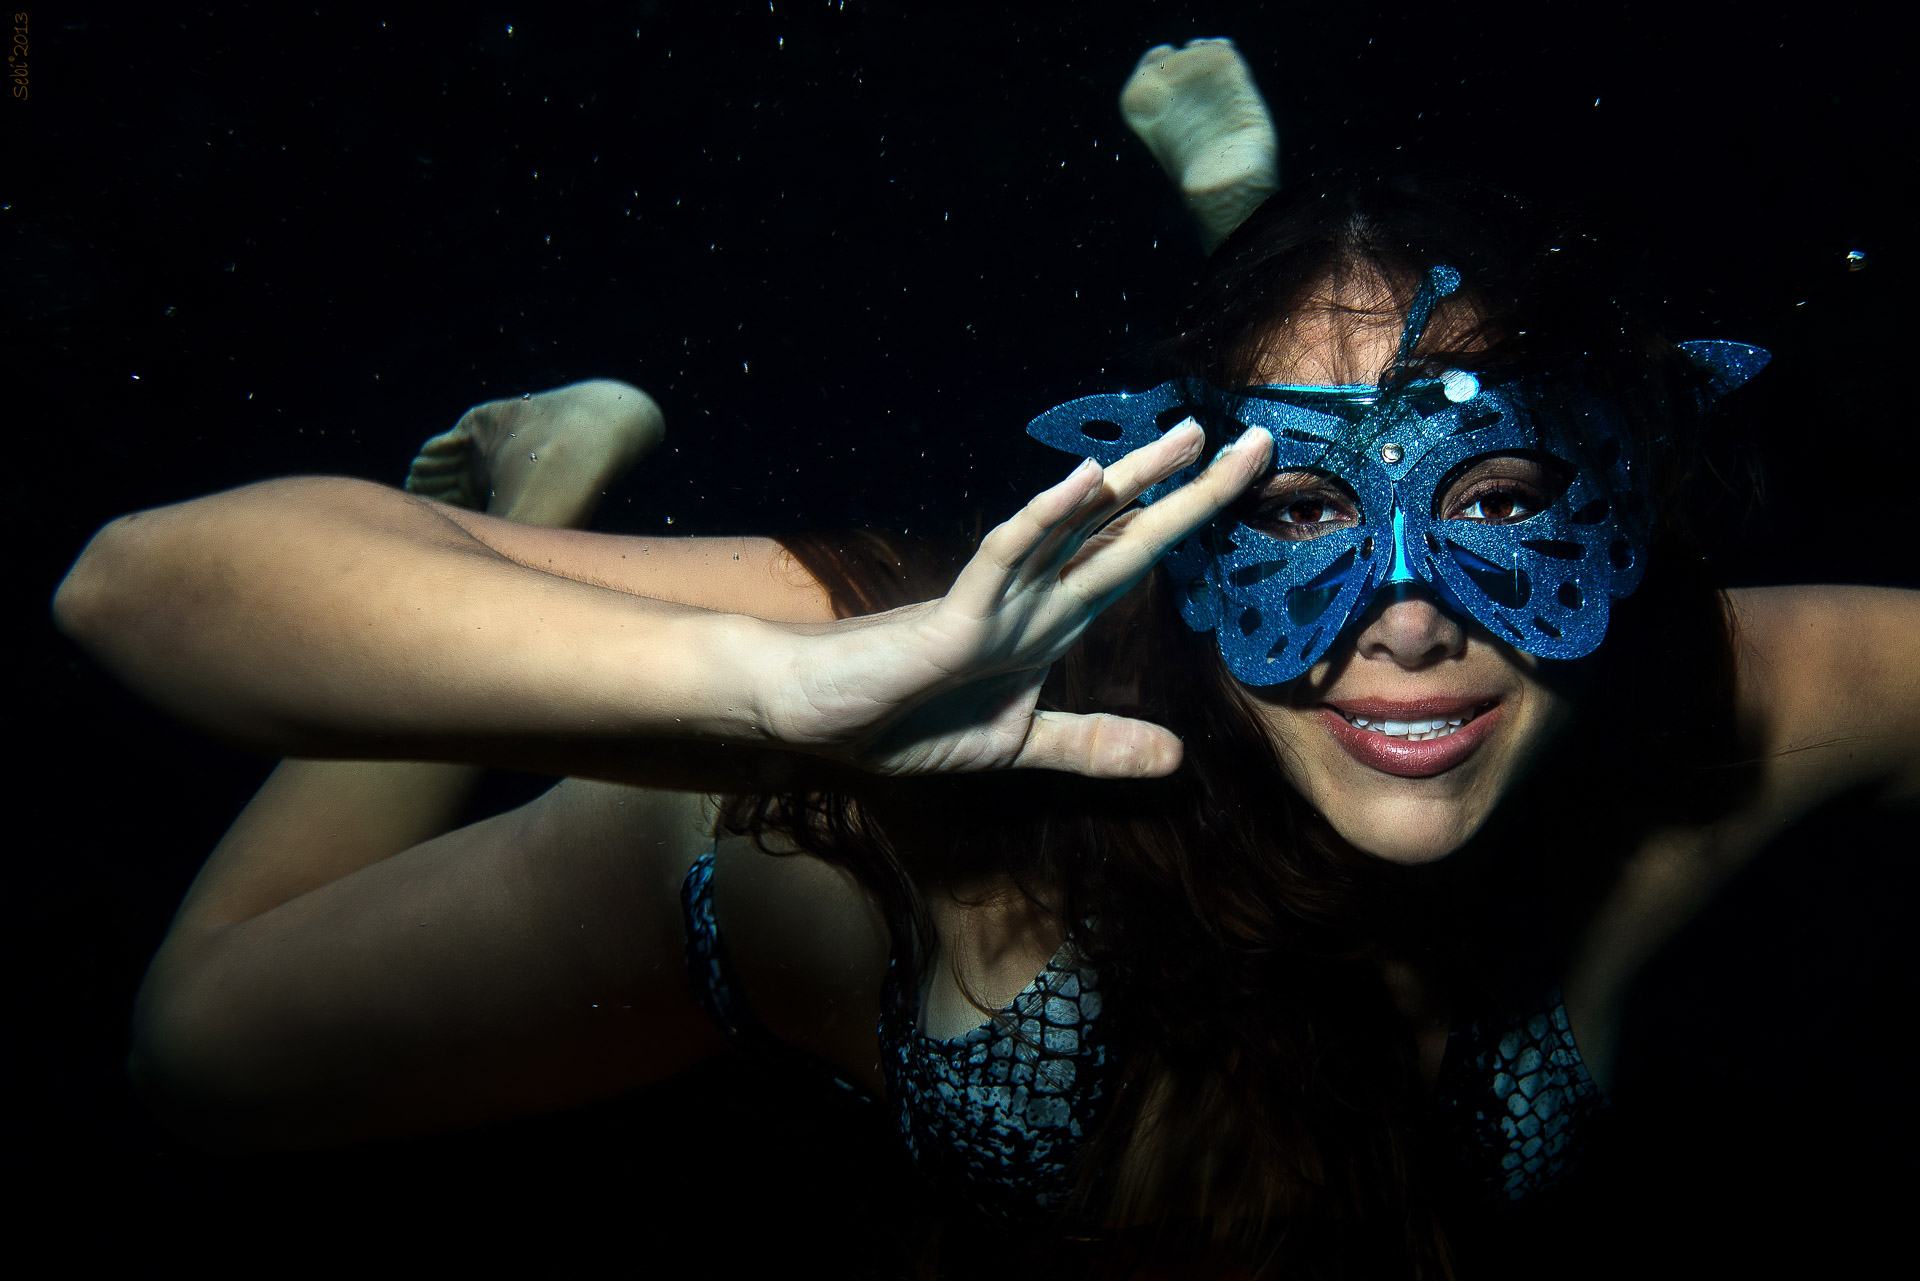 Underwater model in Mexico